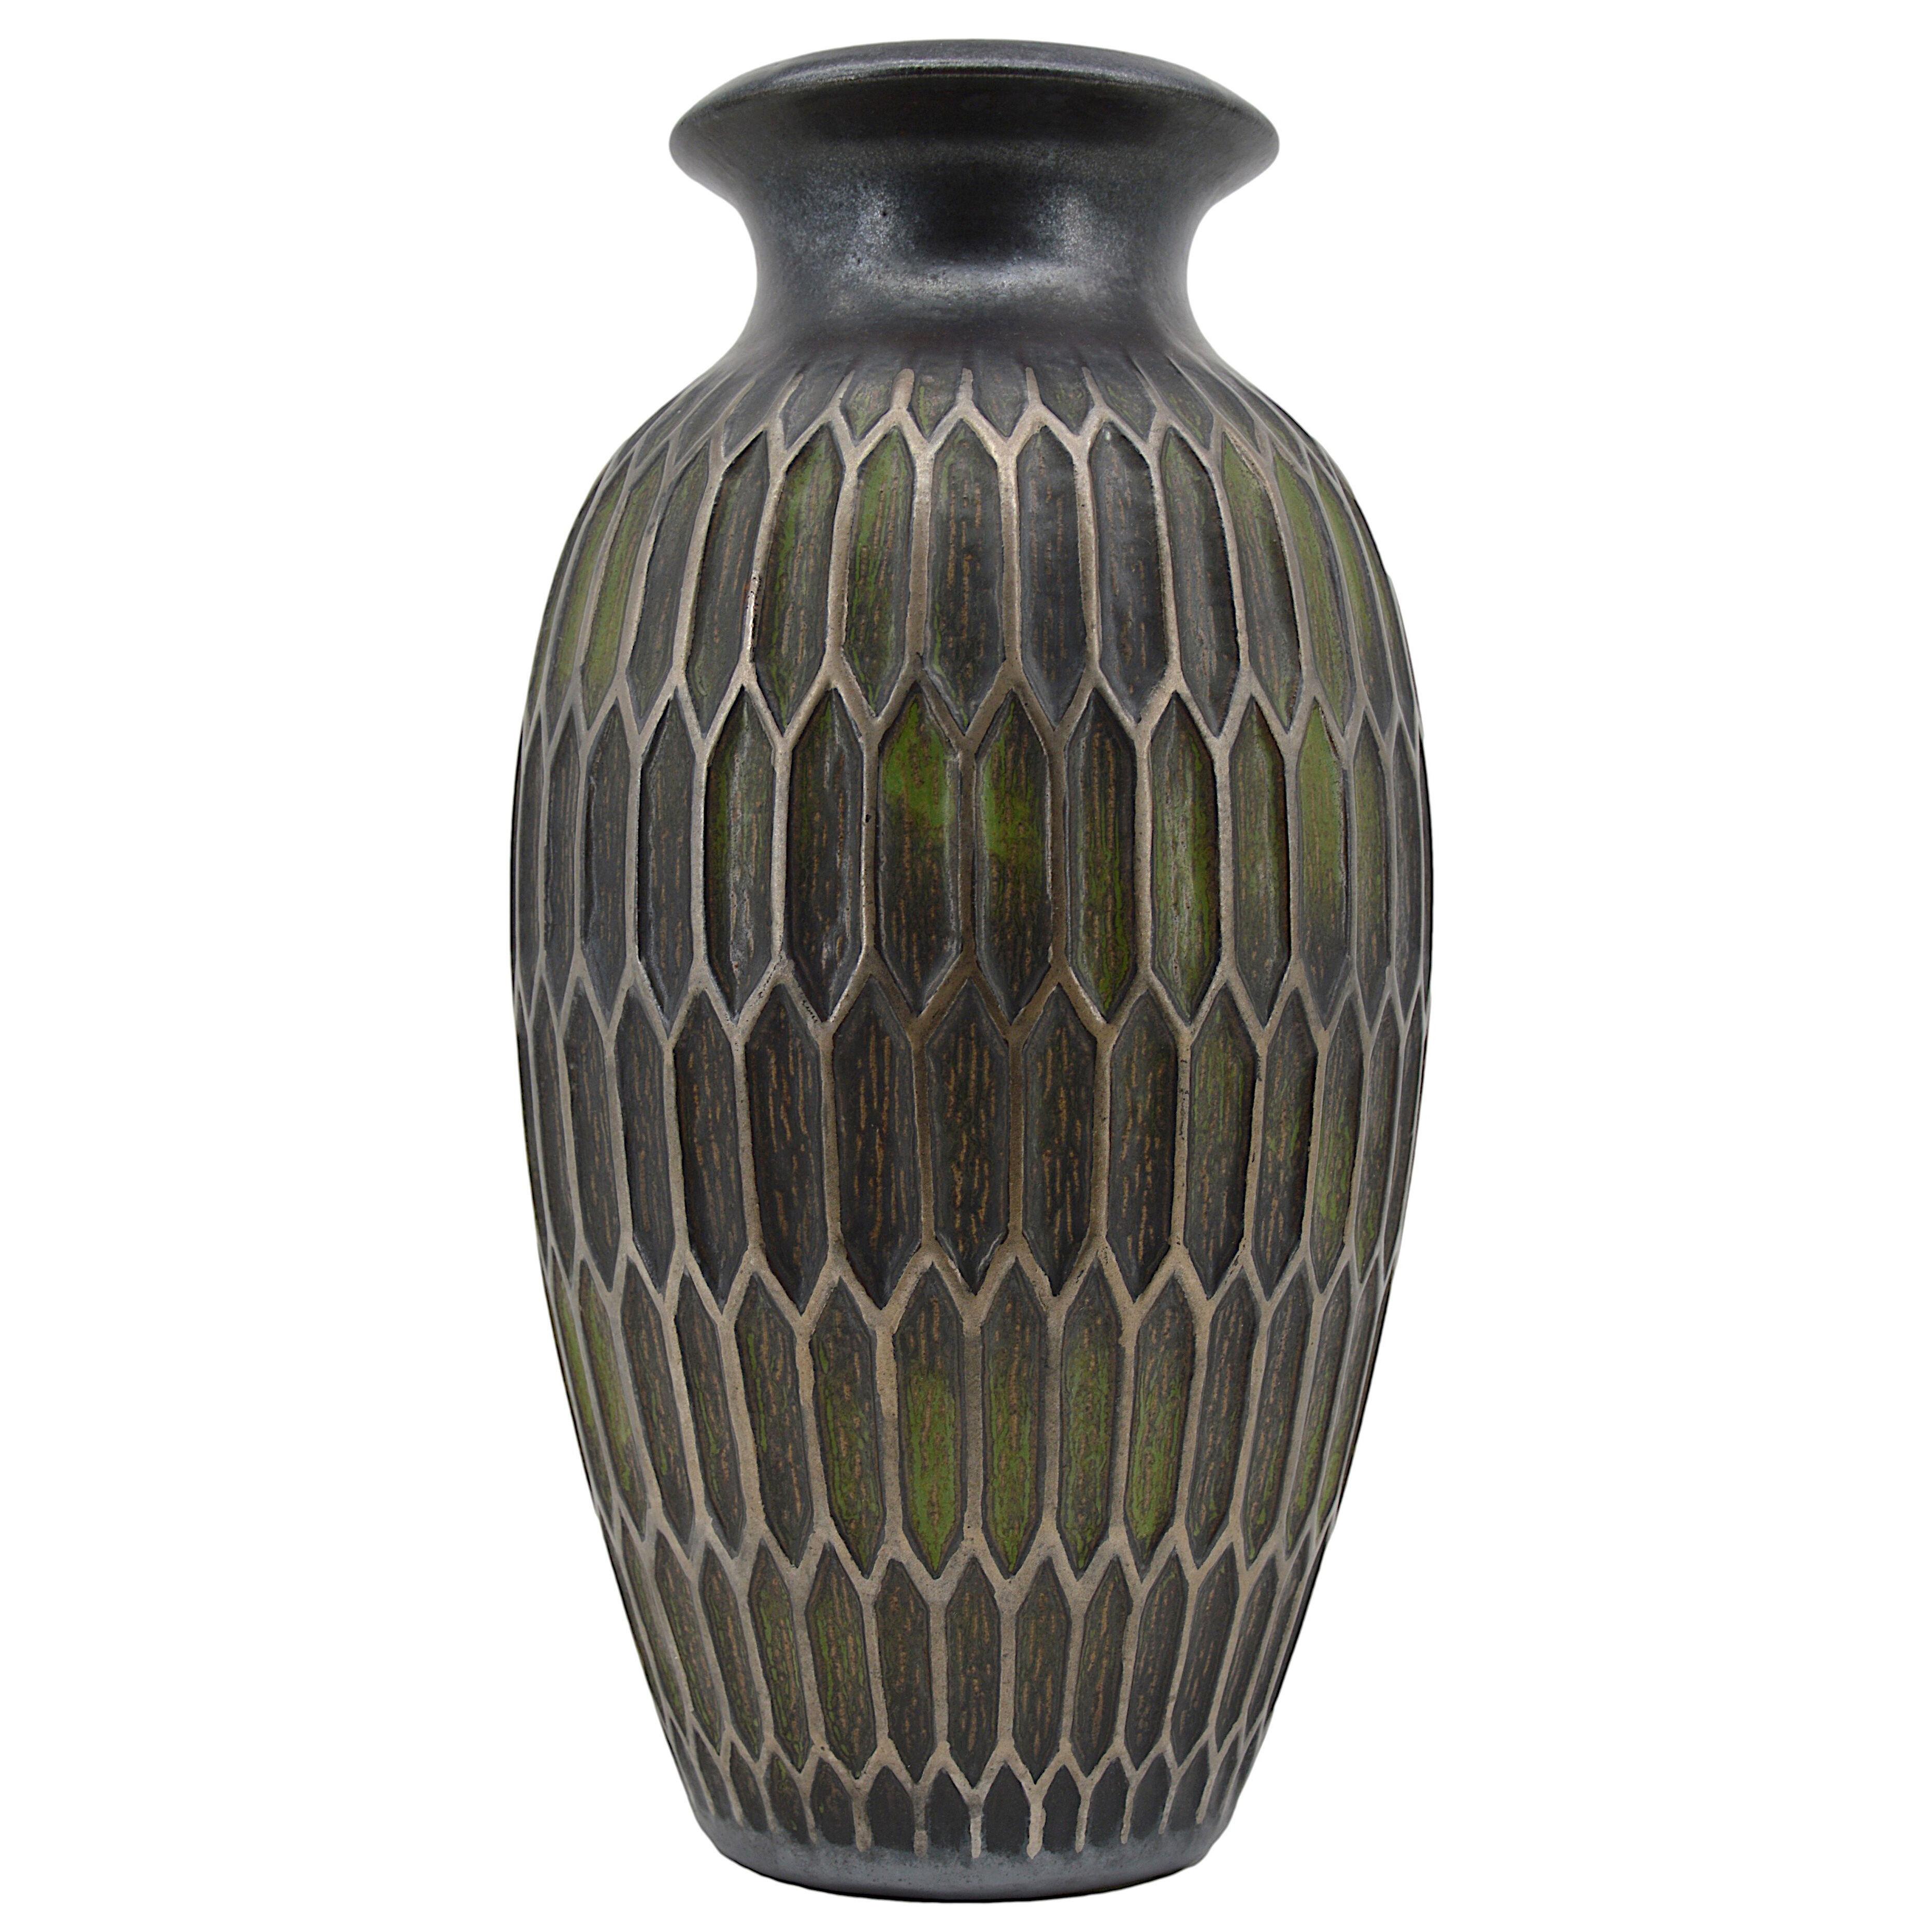 Joseph Mougin Art Deco Vase, Honeycomb, Late 1920s